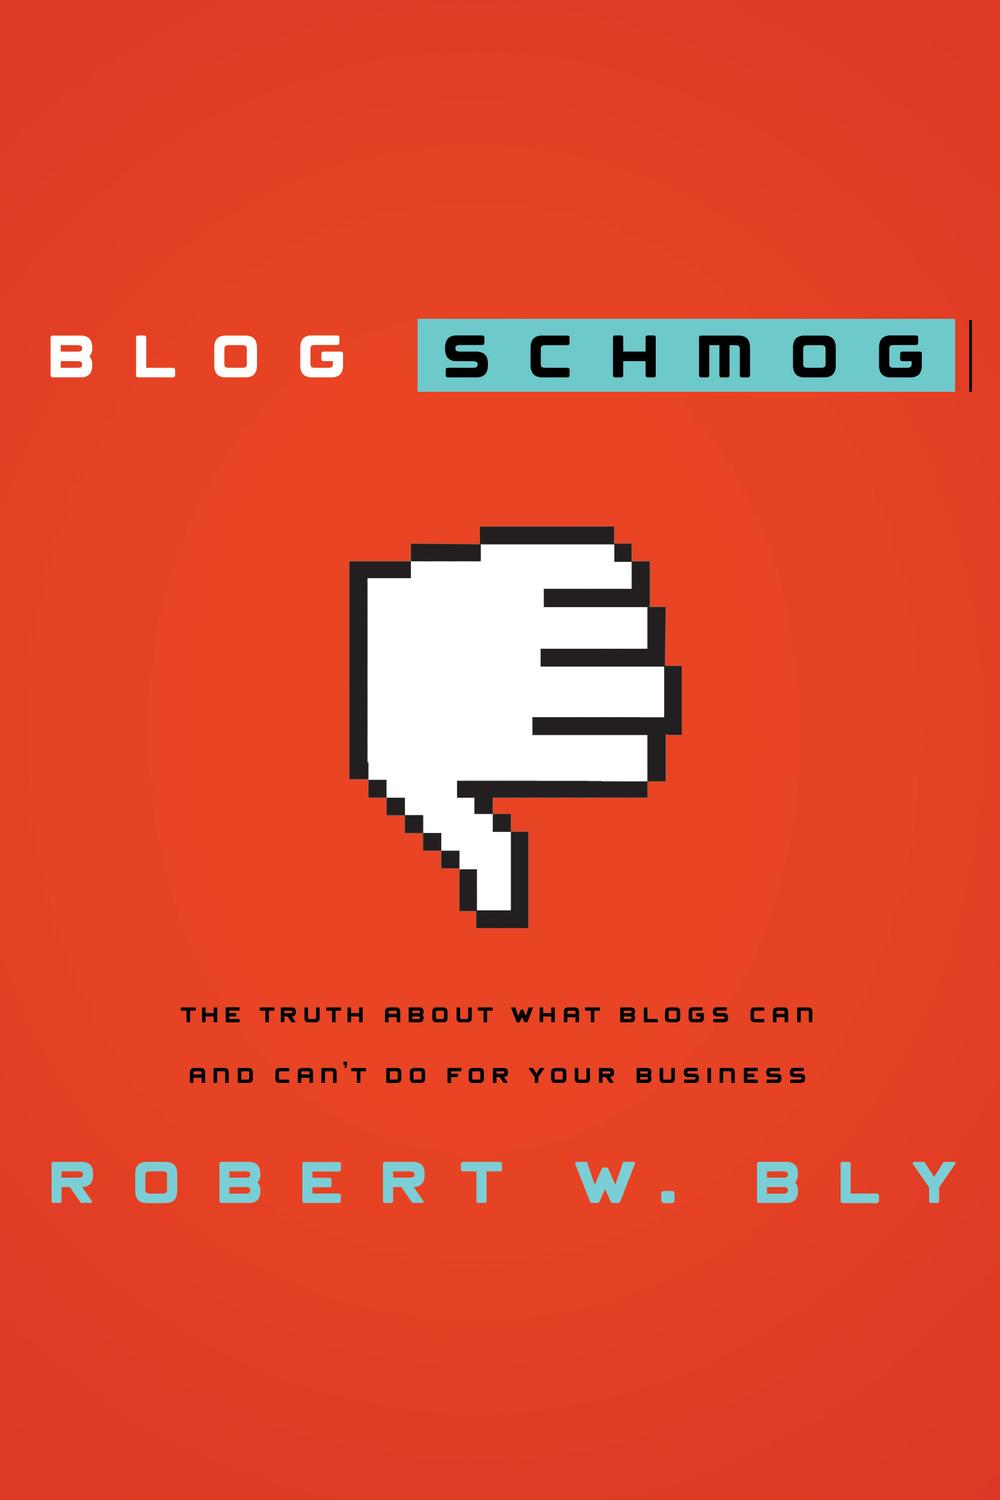 Blog Schmog - Robert W. Bly